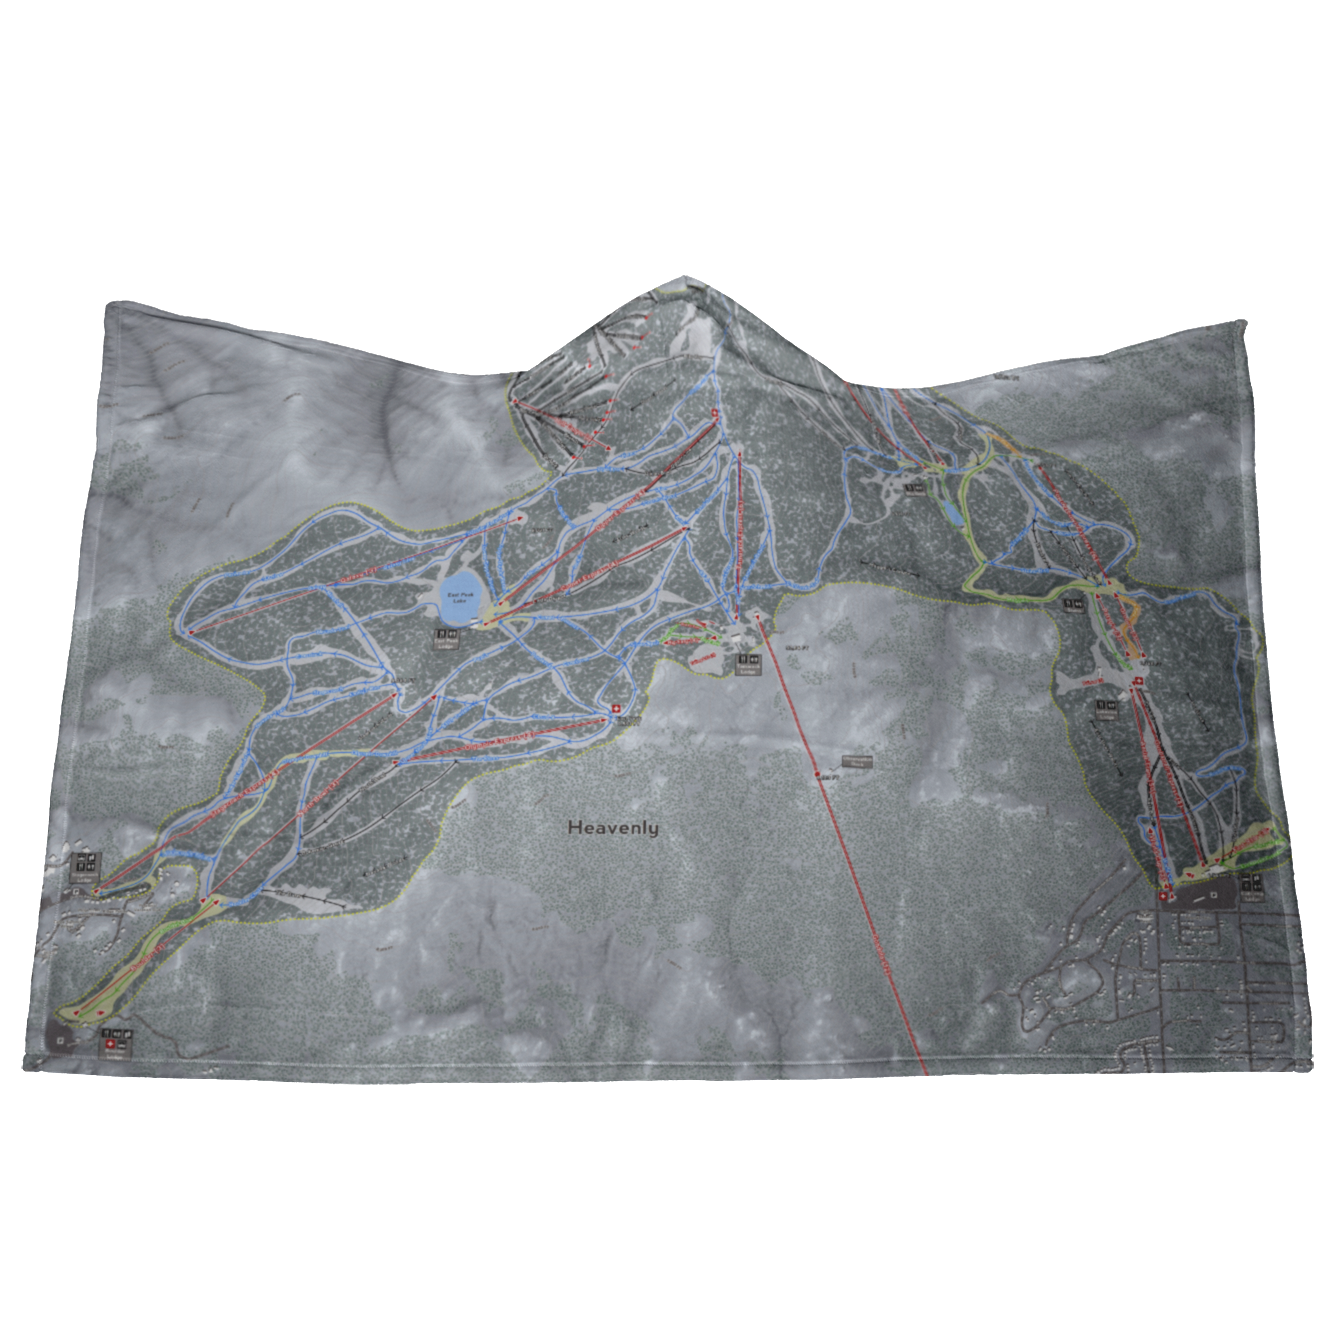 Heavenly, Nevada Ski Trail Map - Hooded Blanket - Powderaddicts